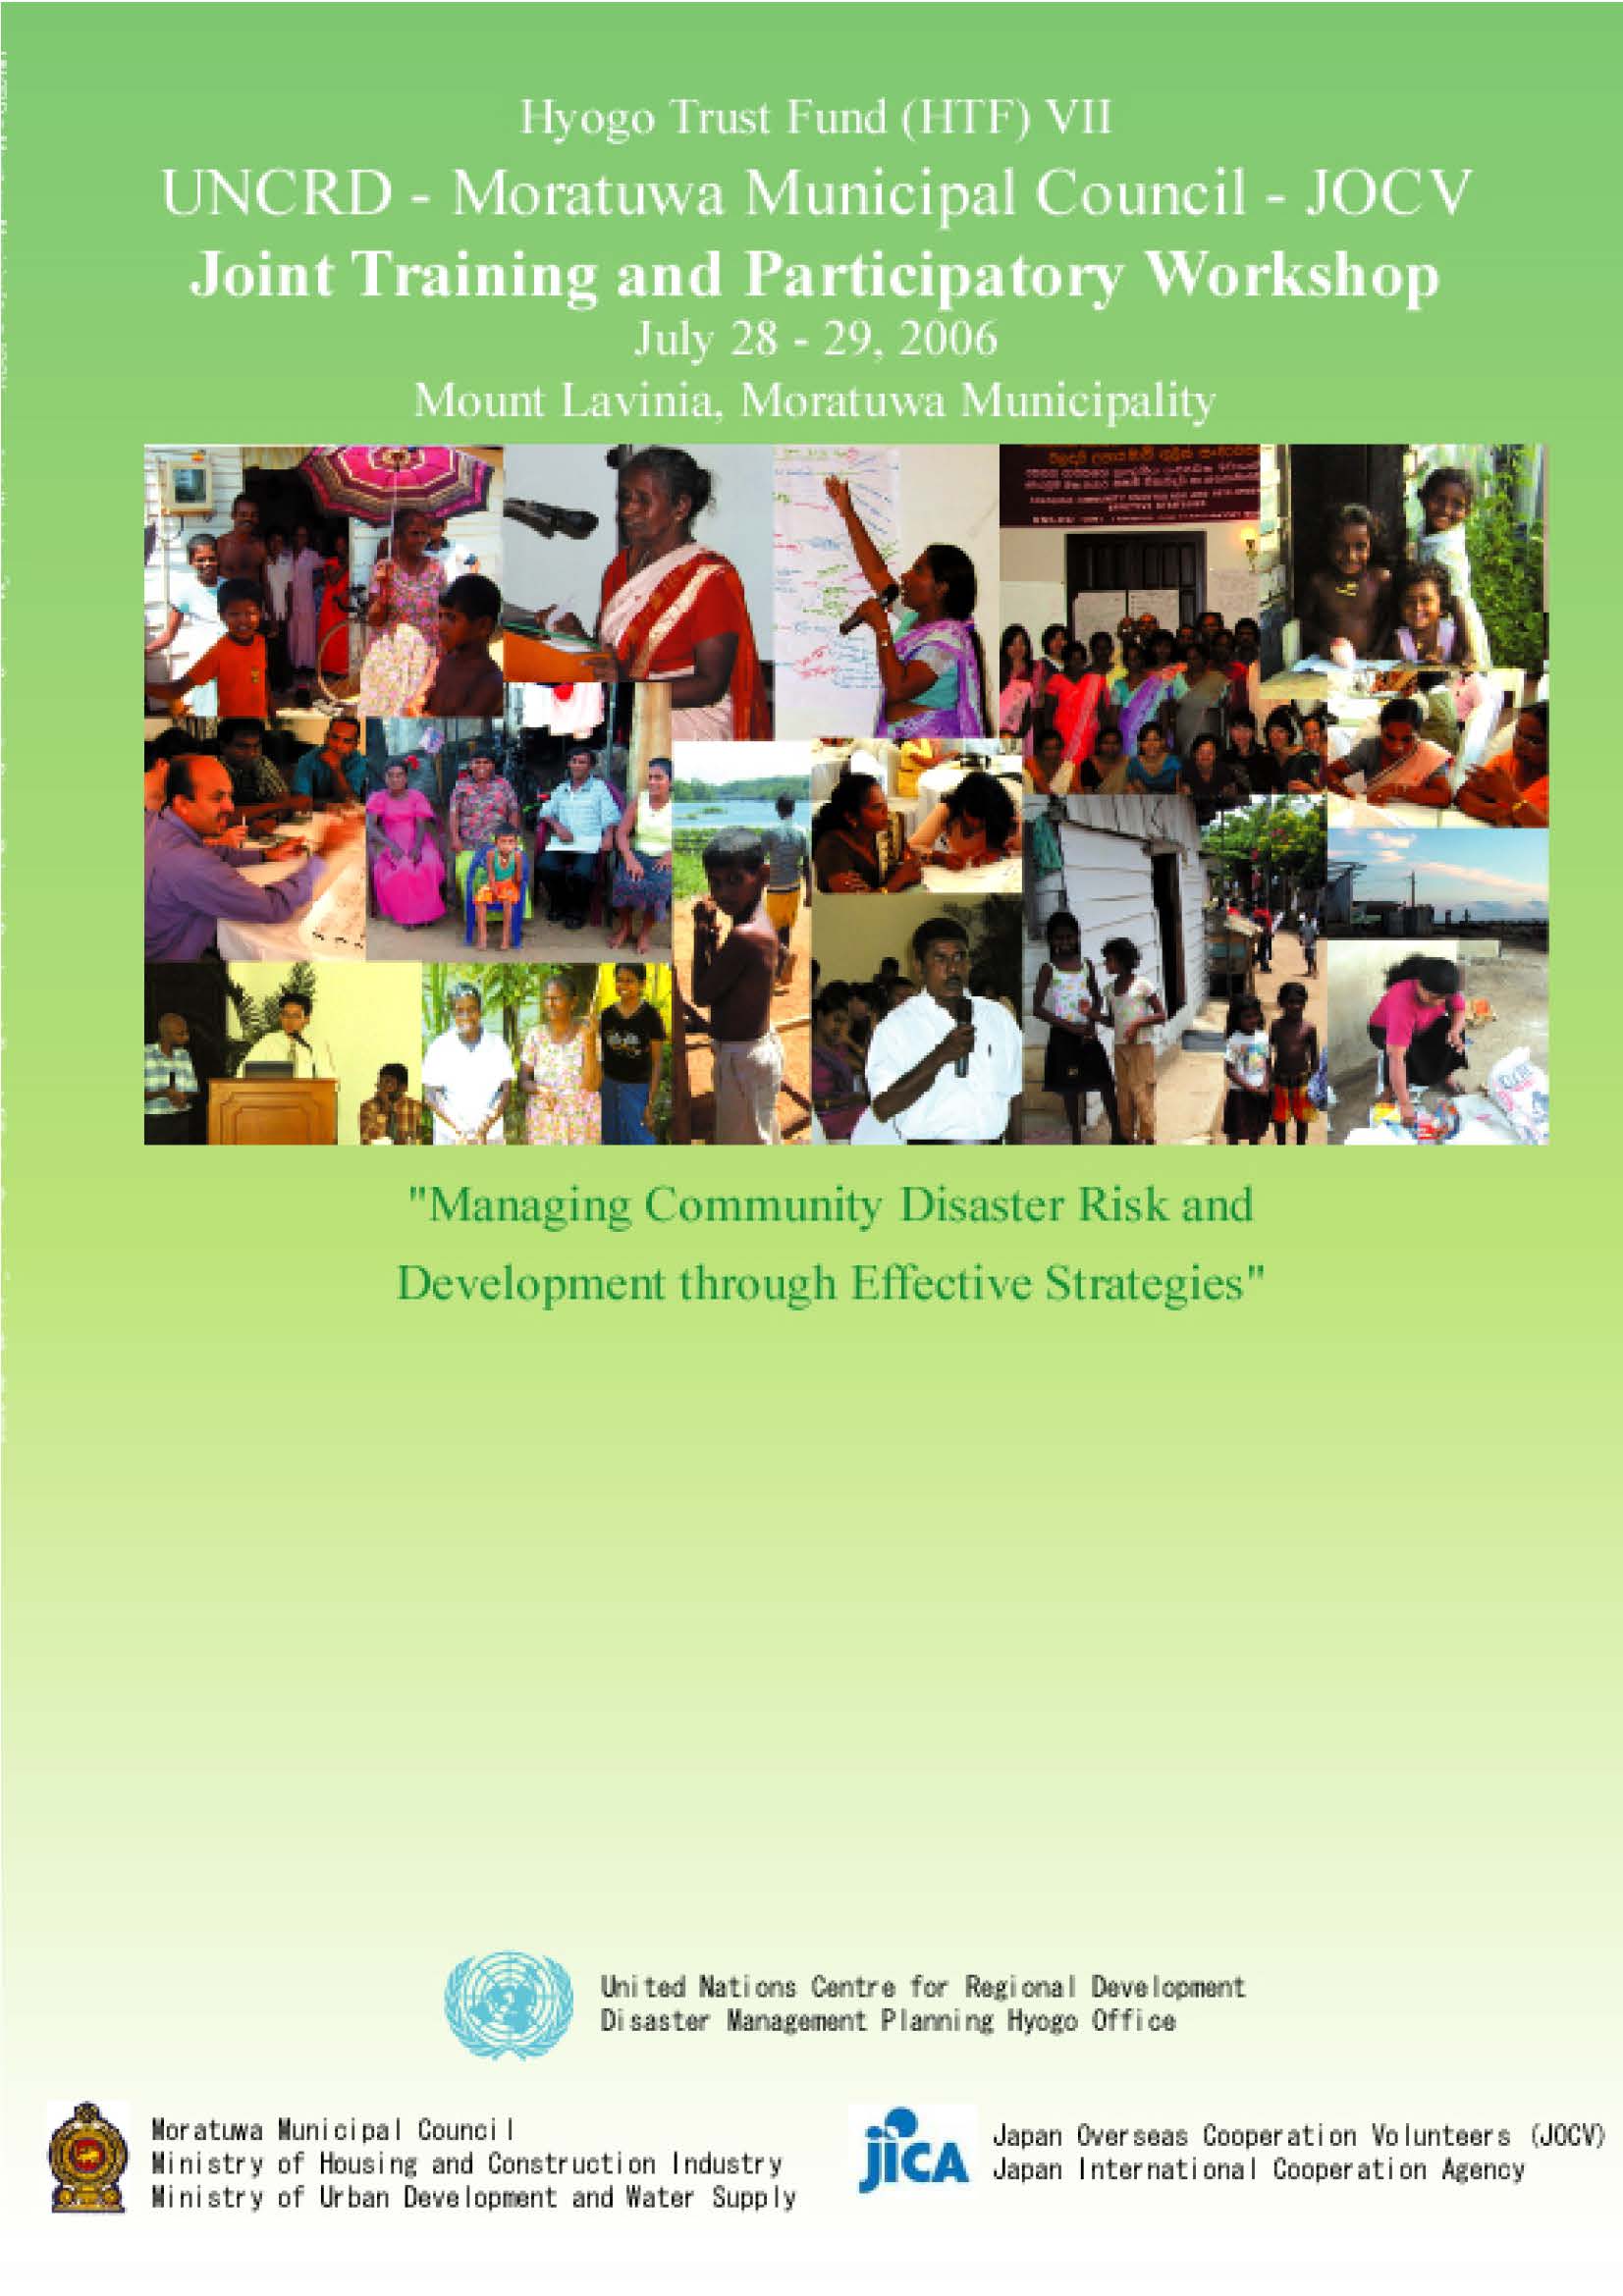 Cover of the Proceedings of HTF VII Moratuwa Municipal Council-JOCV Joint Training